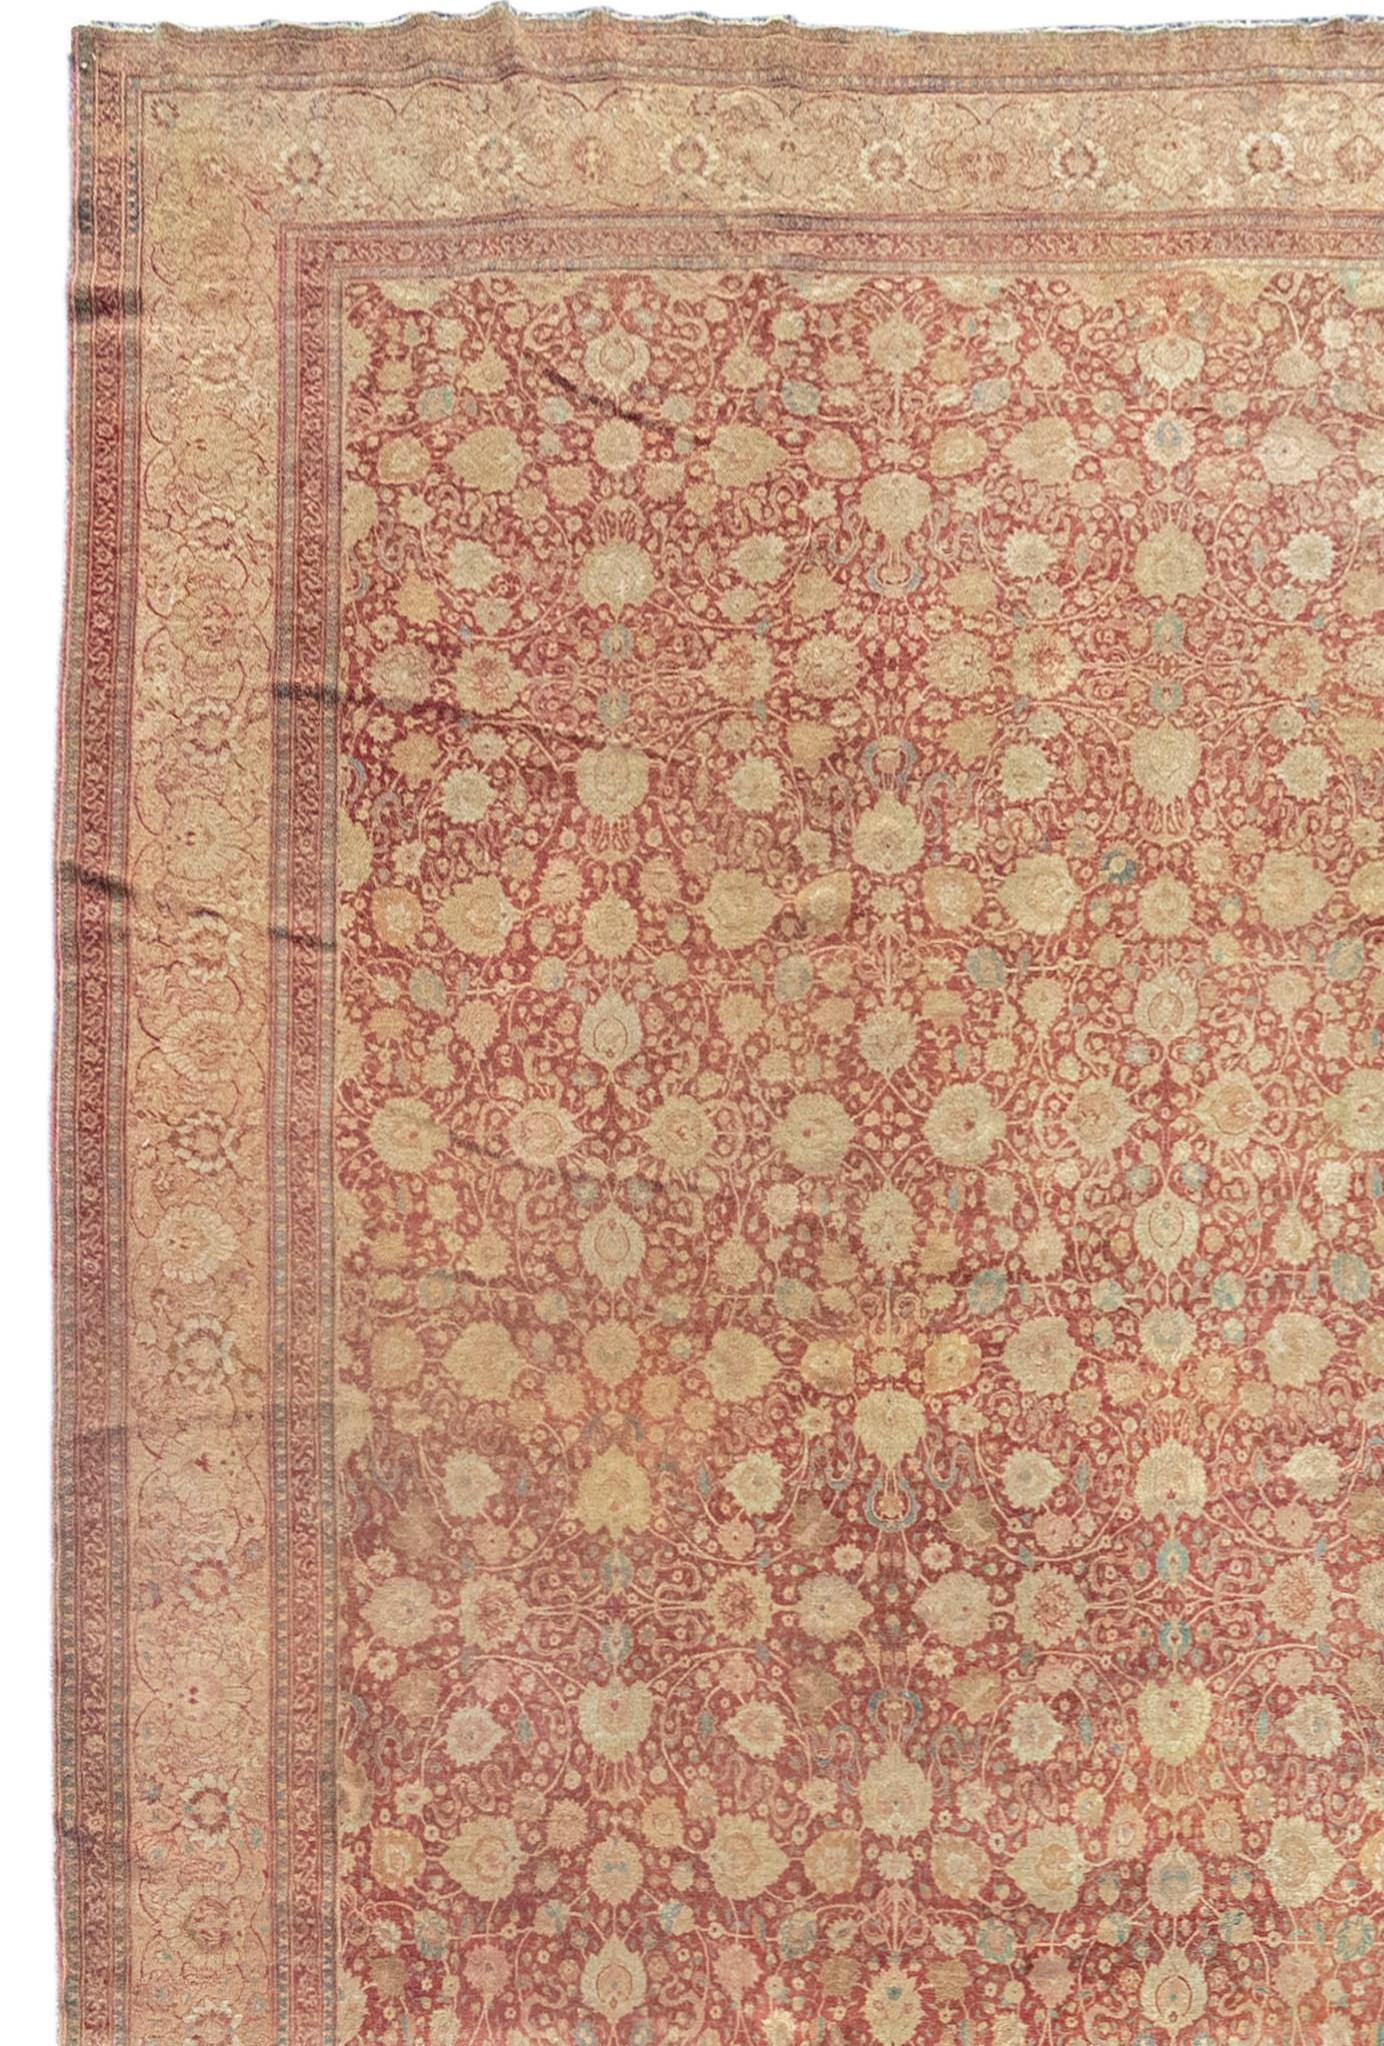 Persian Tabriz carpet. Measures: 14' 5